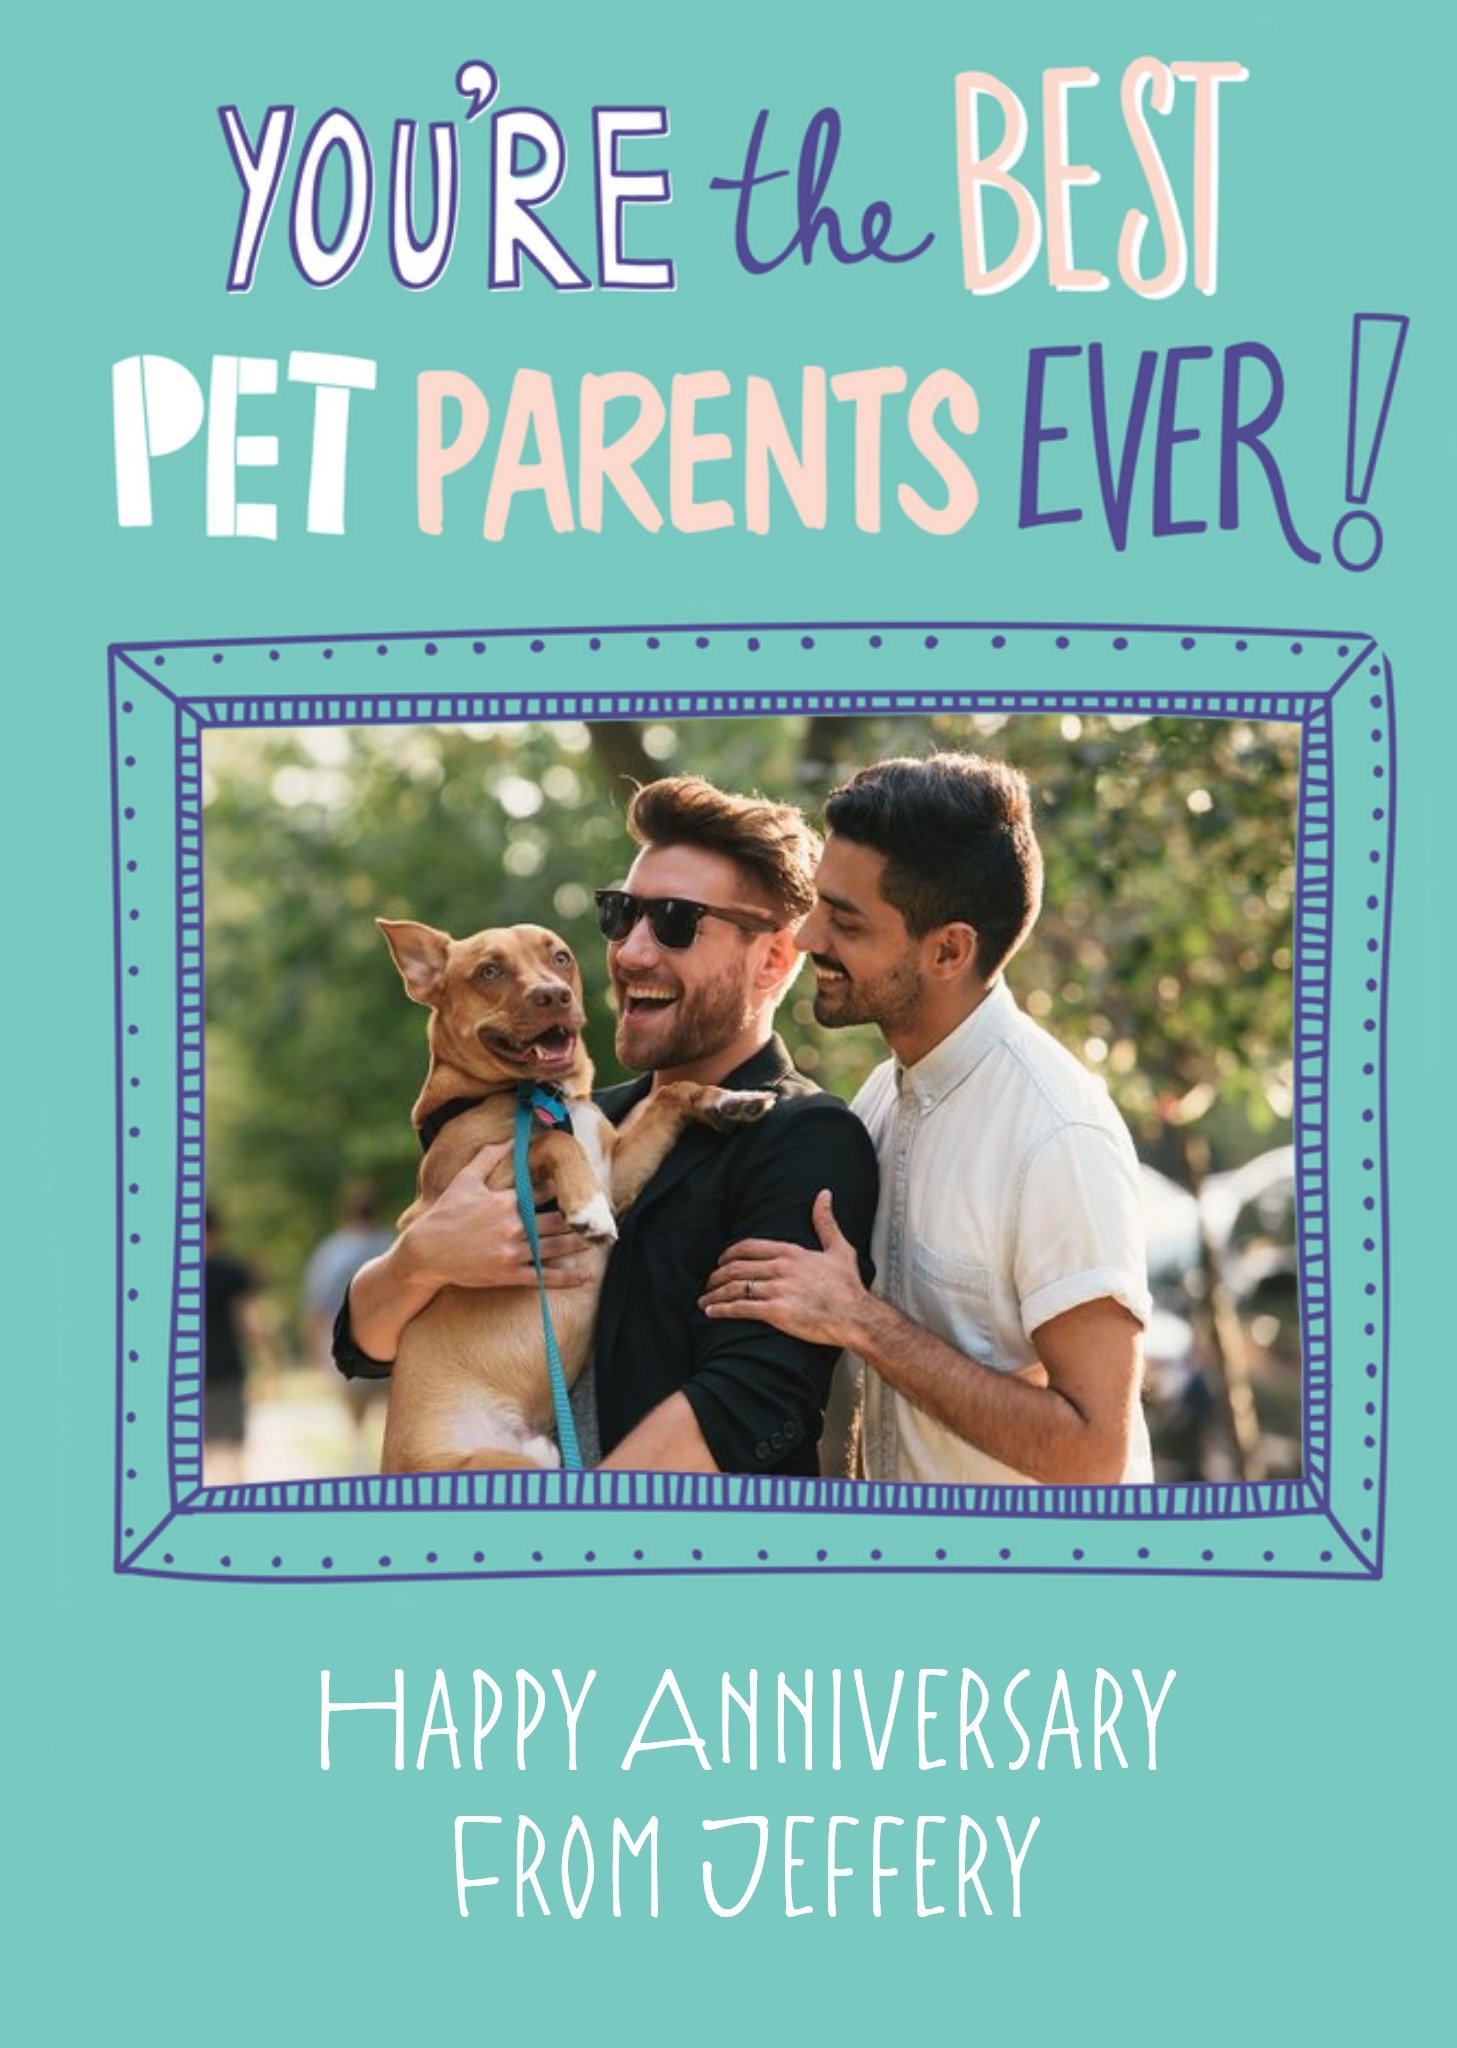 Moonpig Best Pet Parents Ever Photo Upload Anniversary Card Ecard